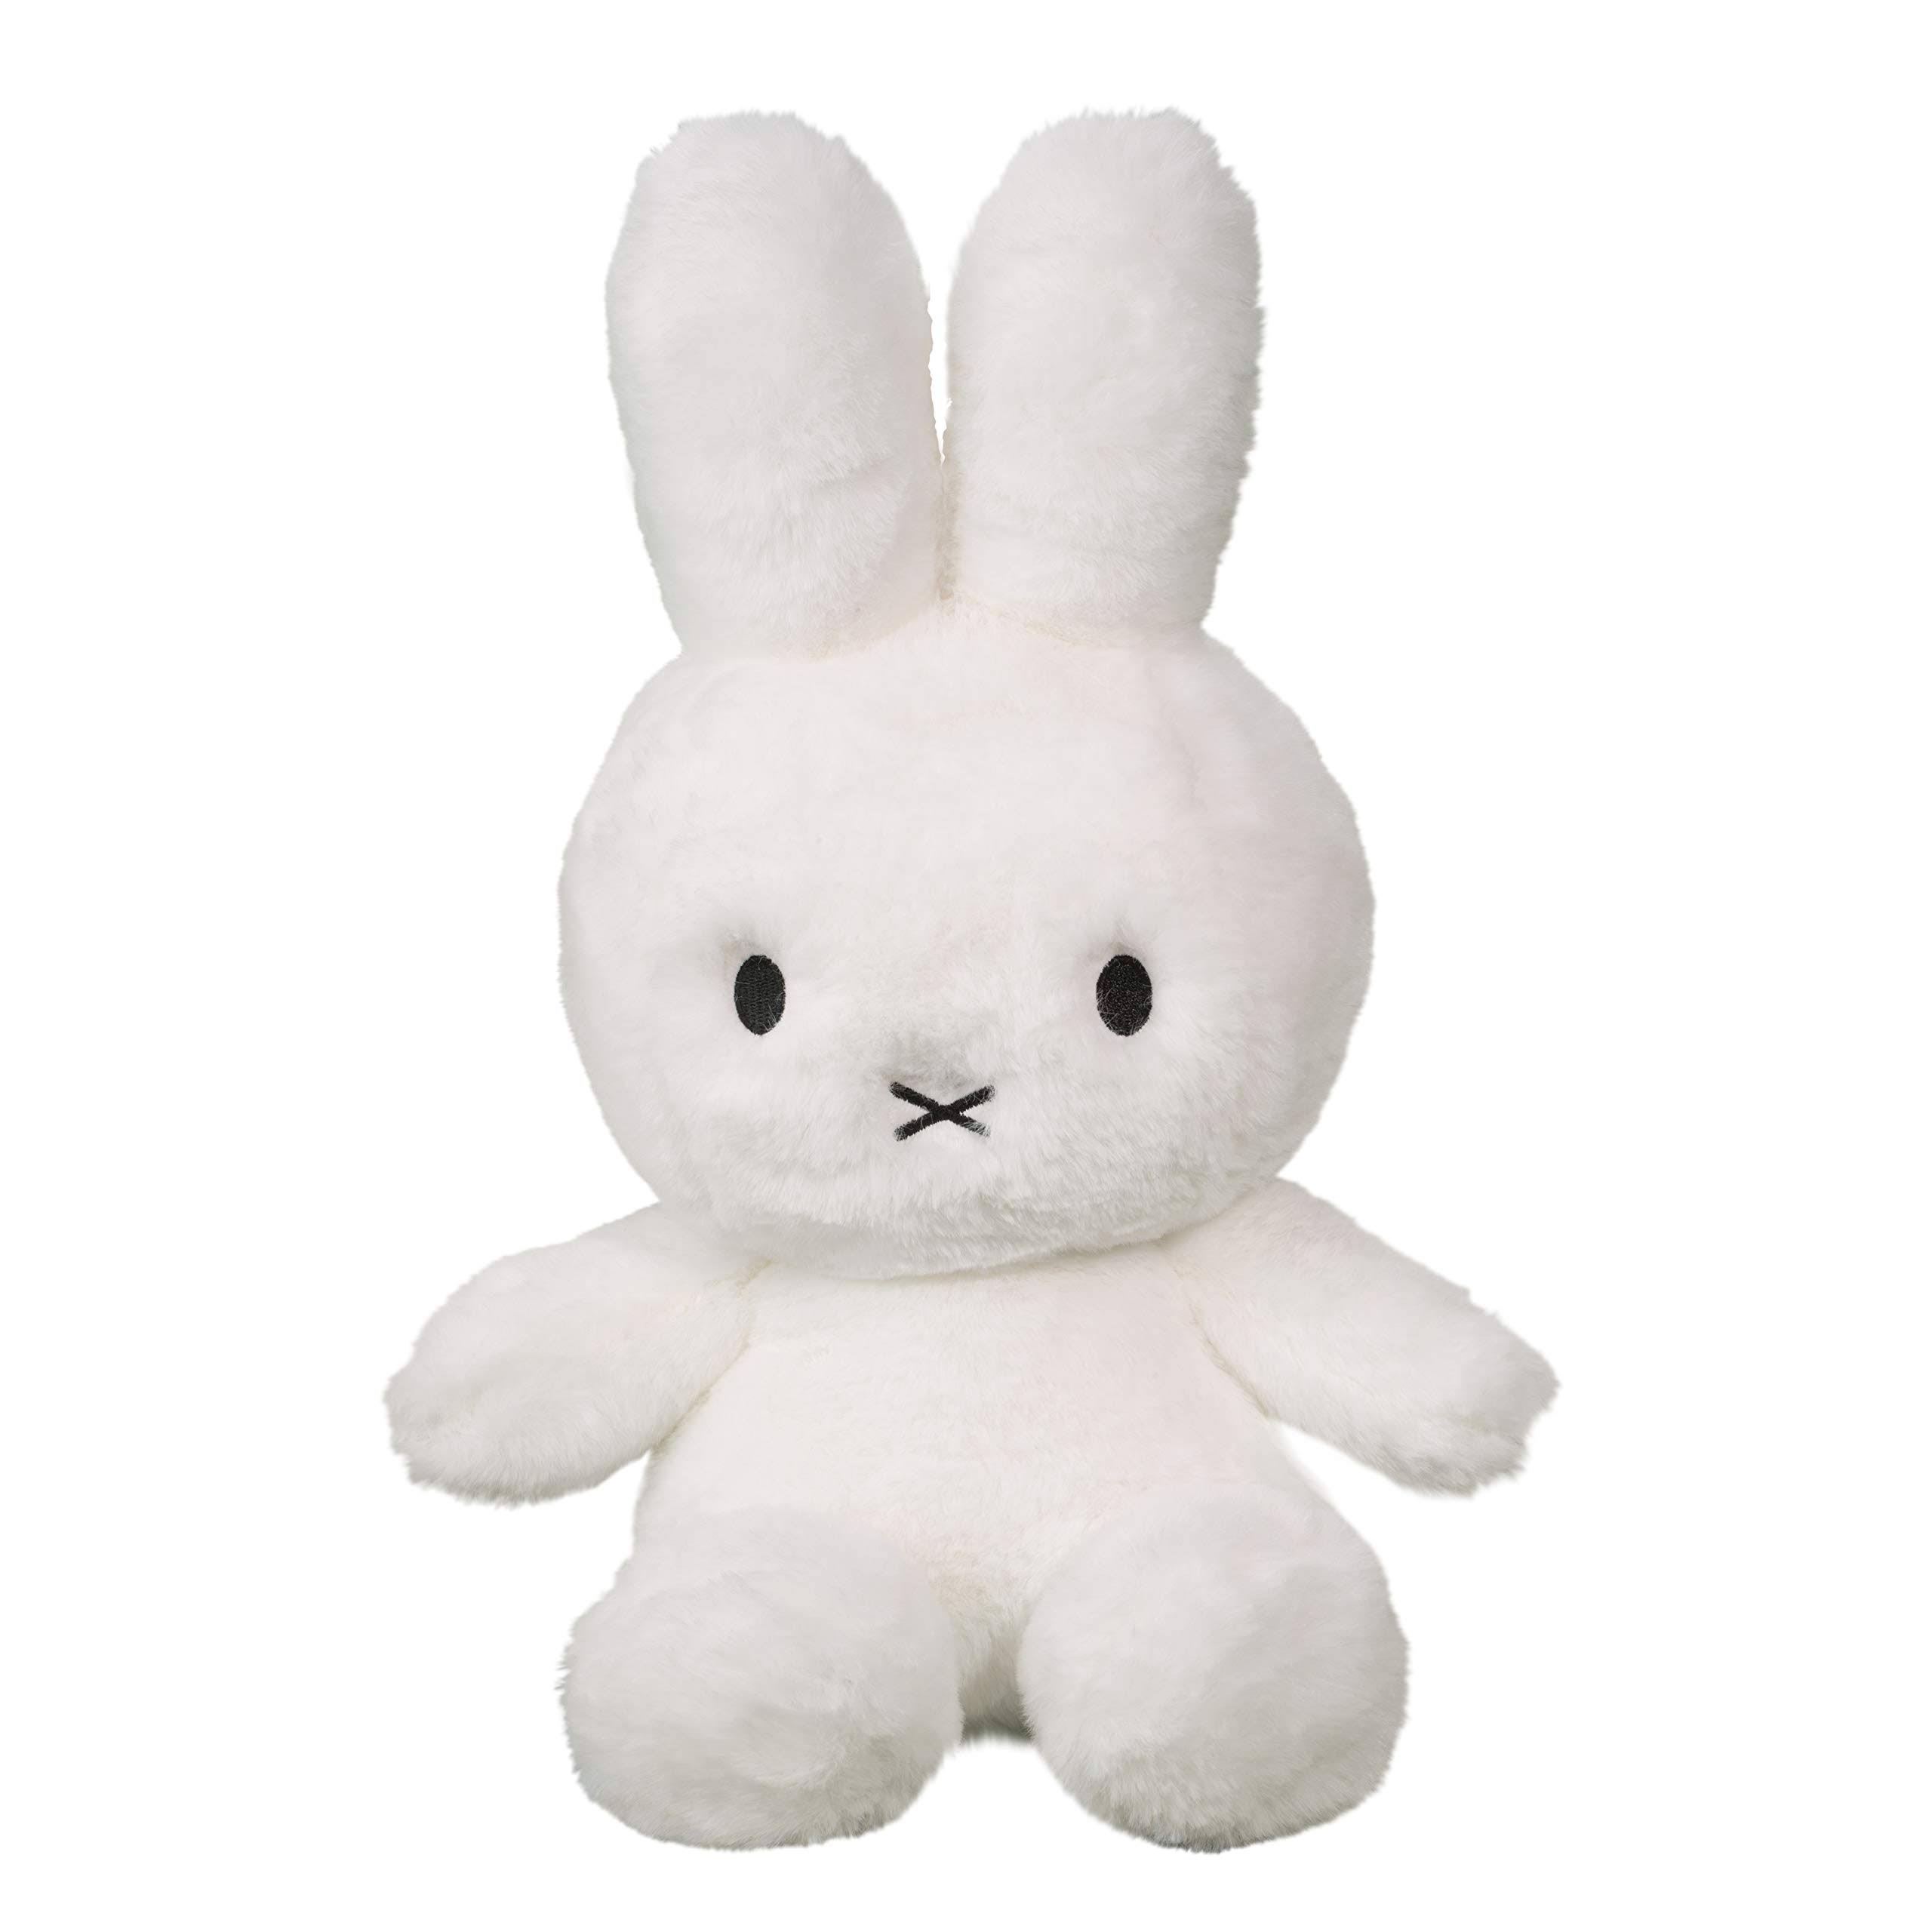 Douglas Miffy Large Classic White Bunny Rabbit Plush Stuffed Animal